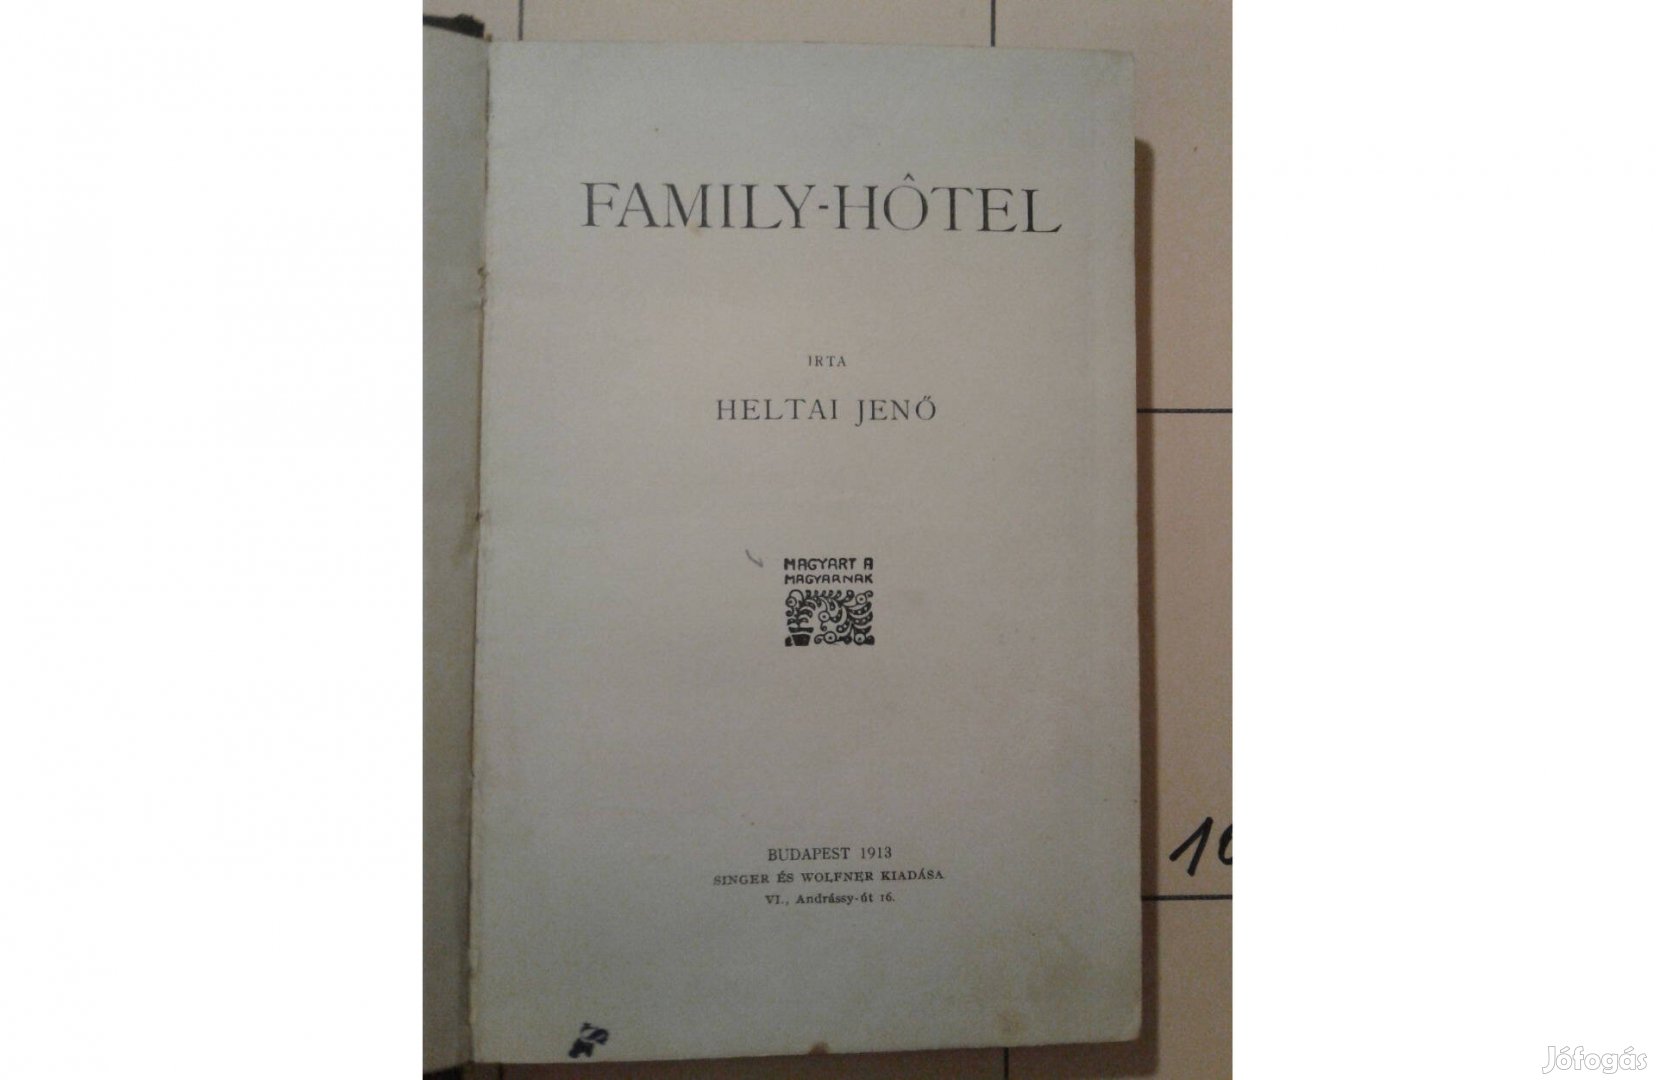 Family-hotel - Heltai Jenő 1913